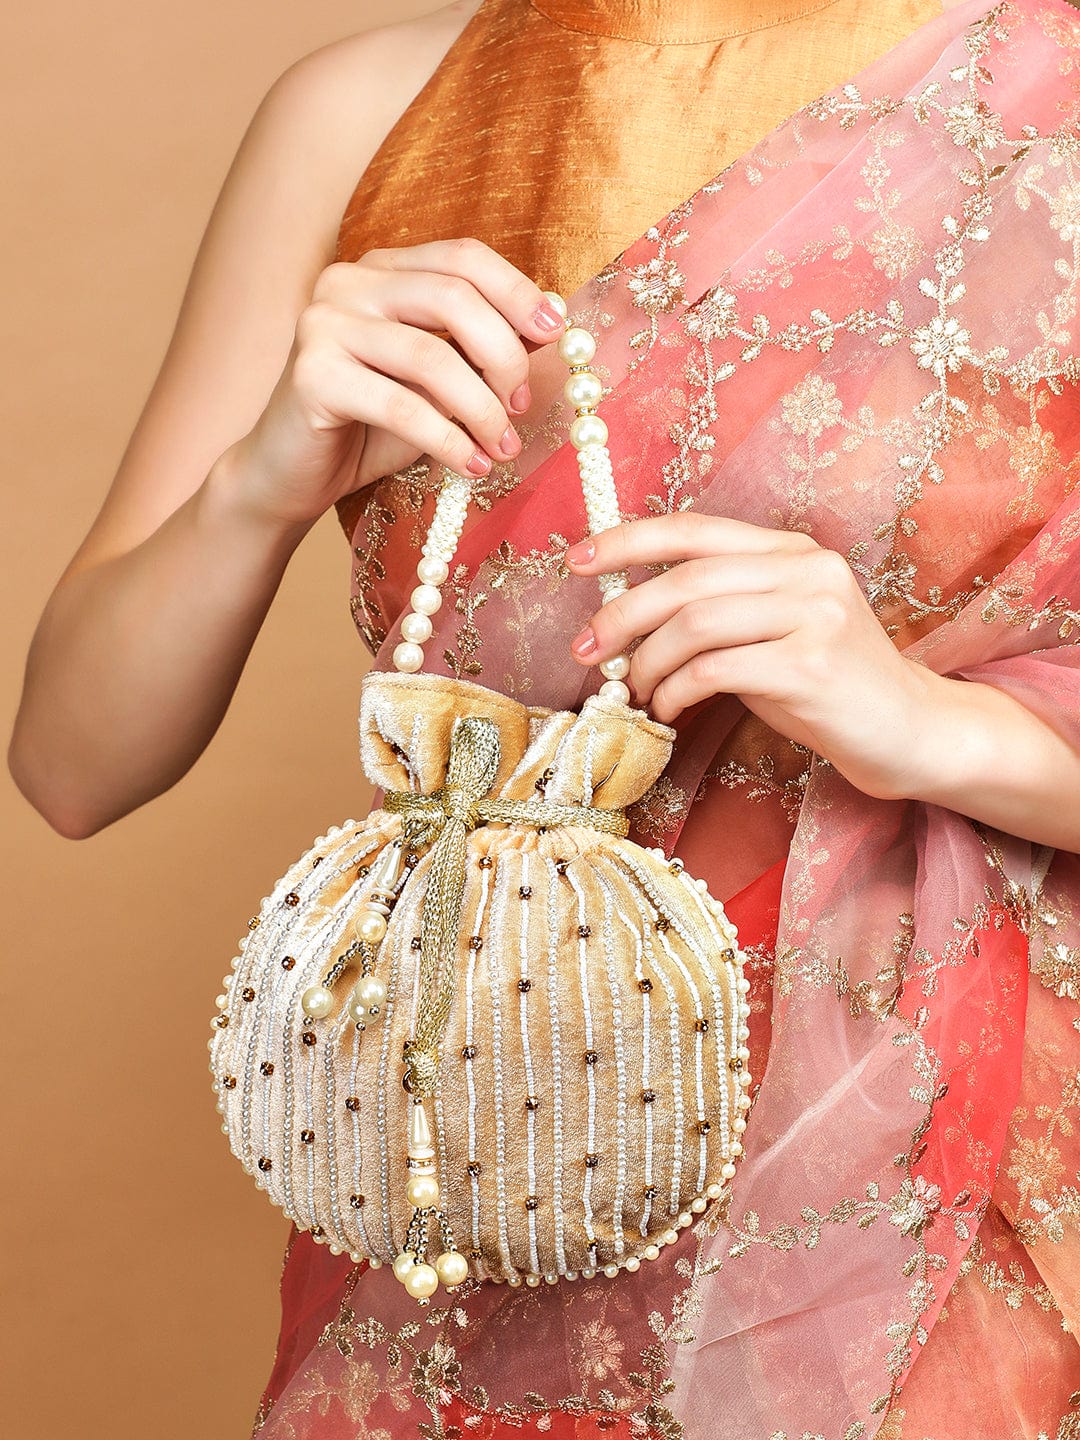 Rubans Cream Coloured Velvet Potli Bag With Pearls And Golden Beads Handbag &amp; Wallet Accessories